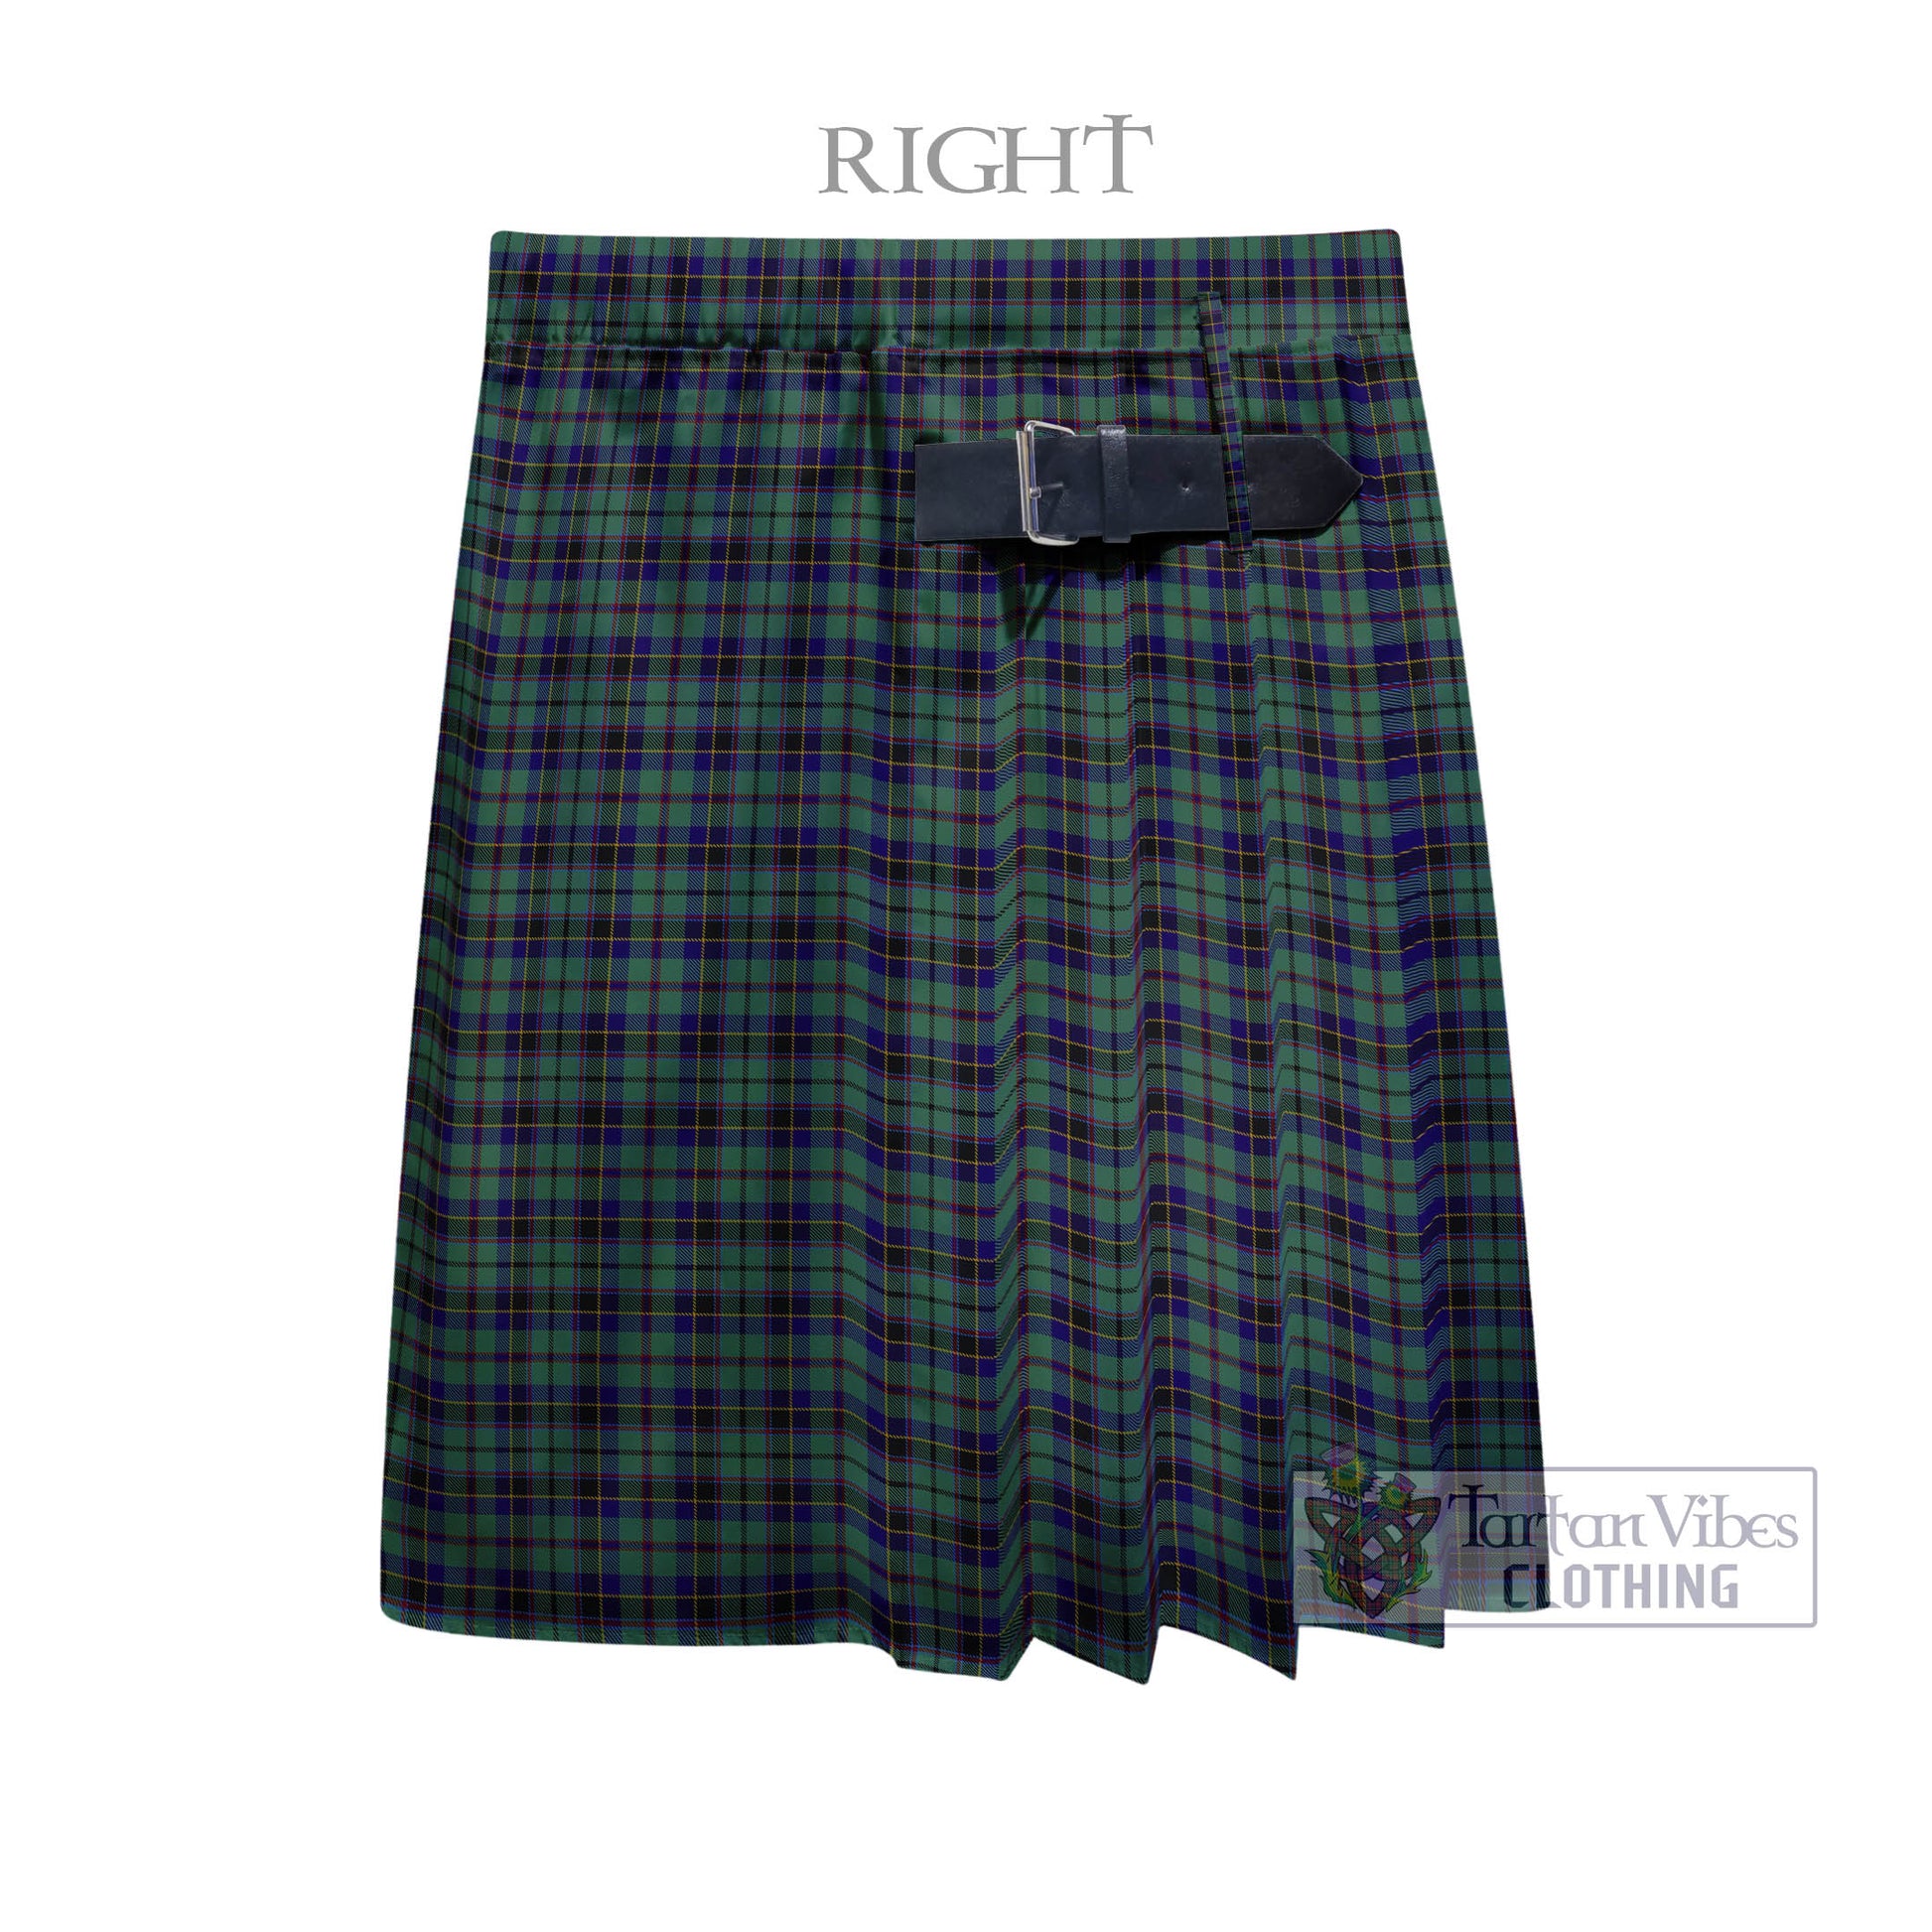 Tartan Vibes Clothing Stephenson Tartan Men's Pleated Skirt - Fashion Casual Retro Scottish Style